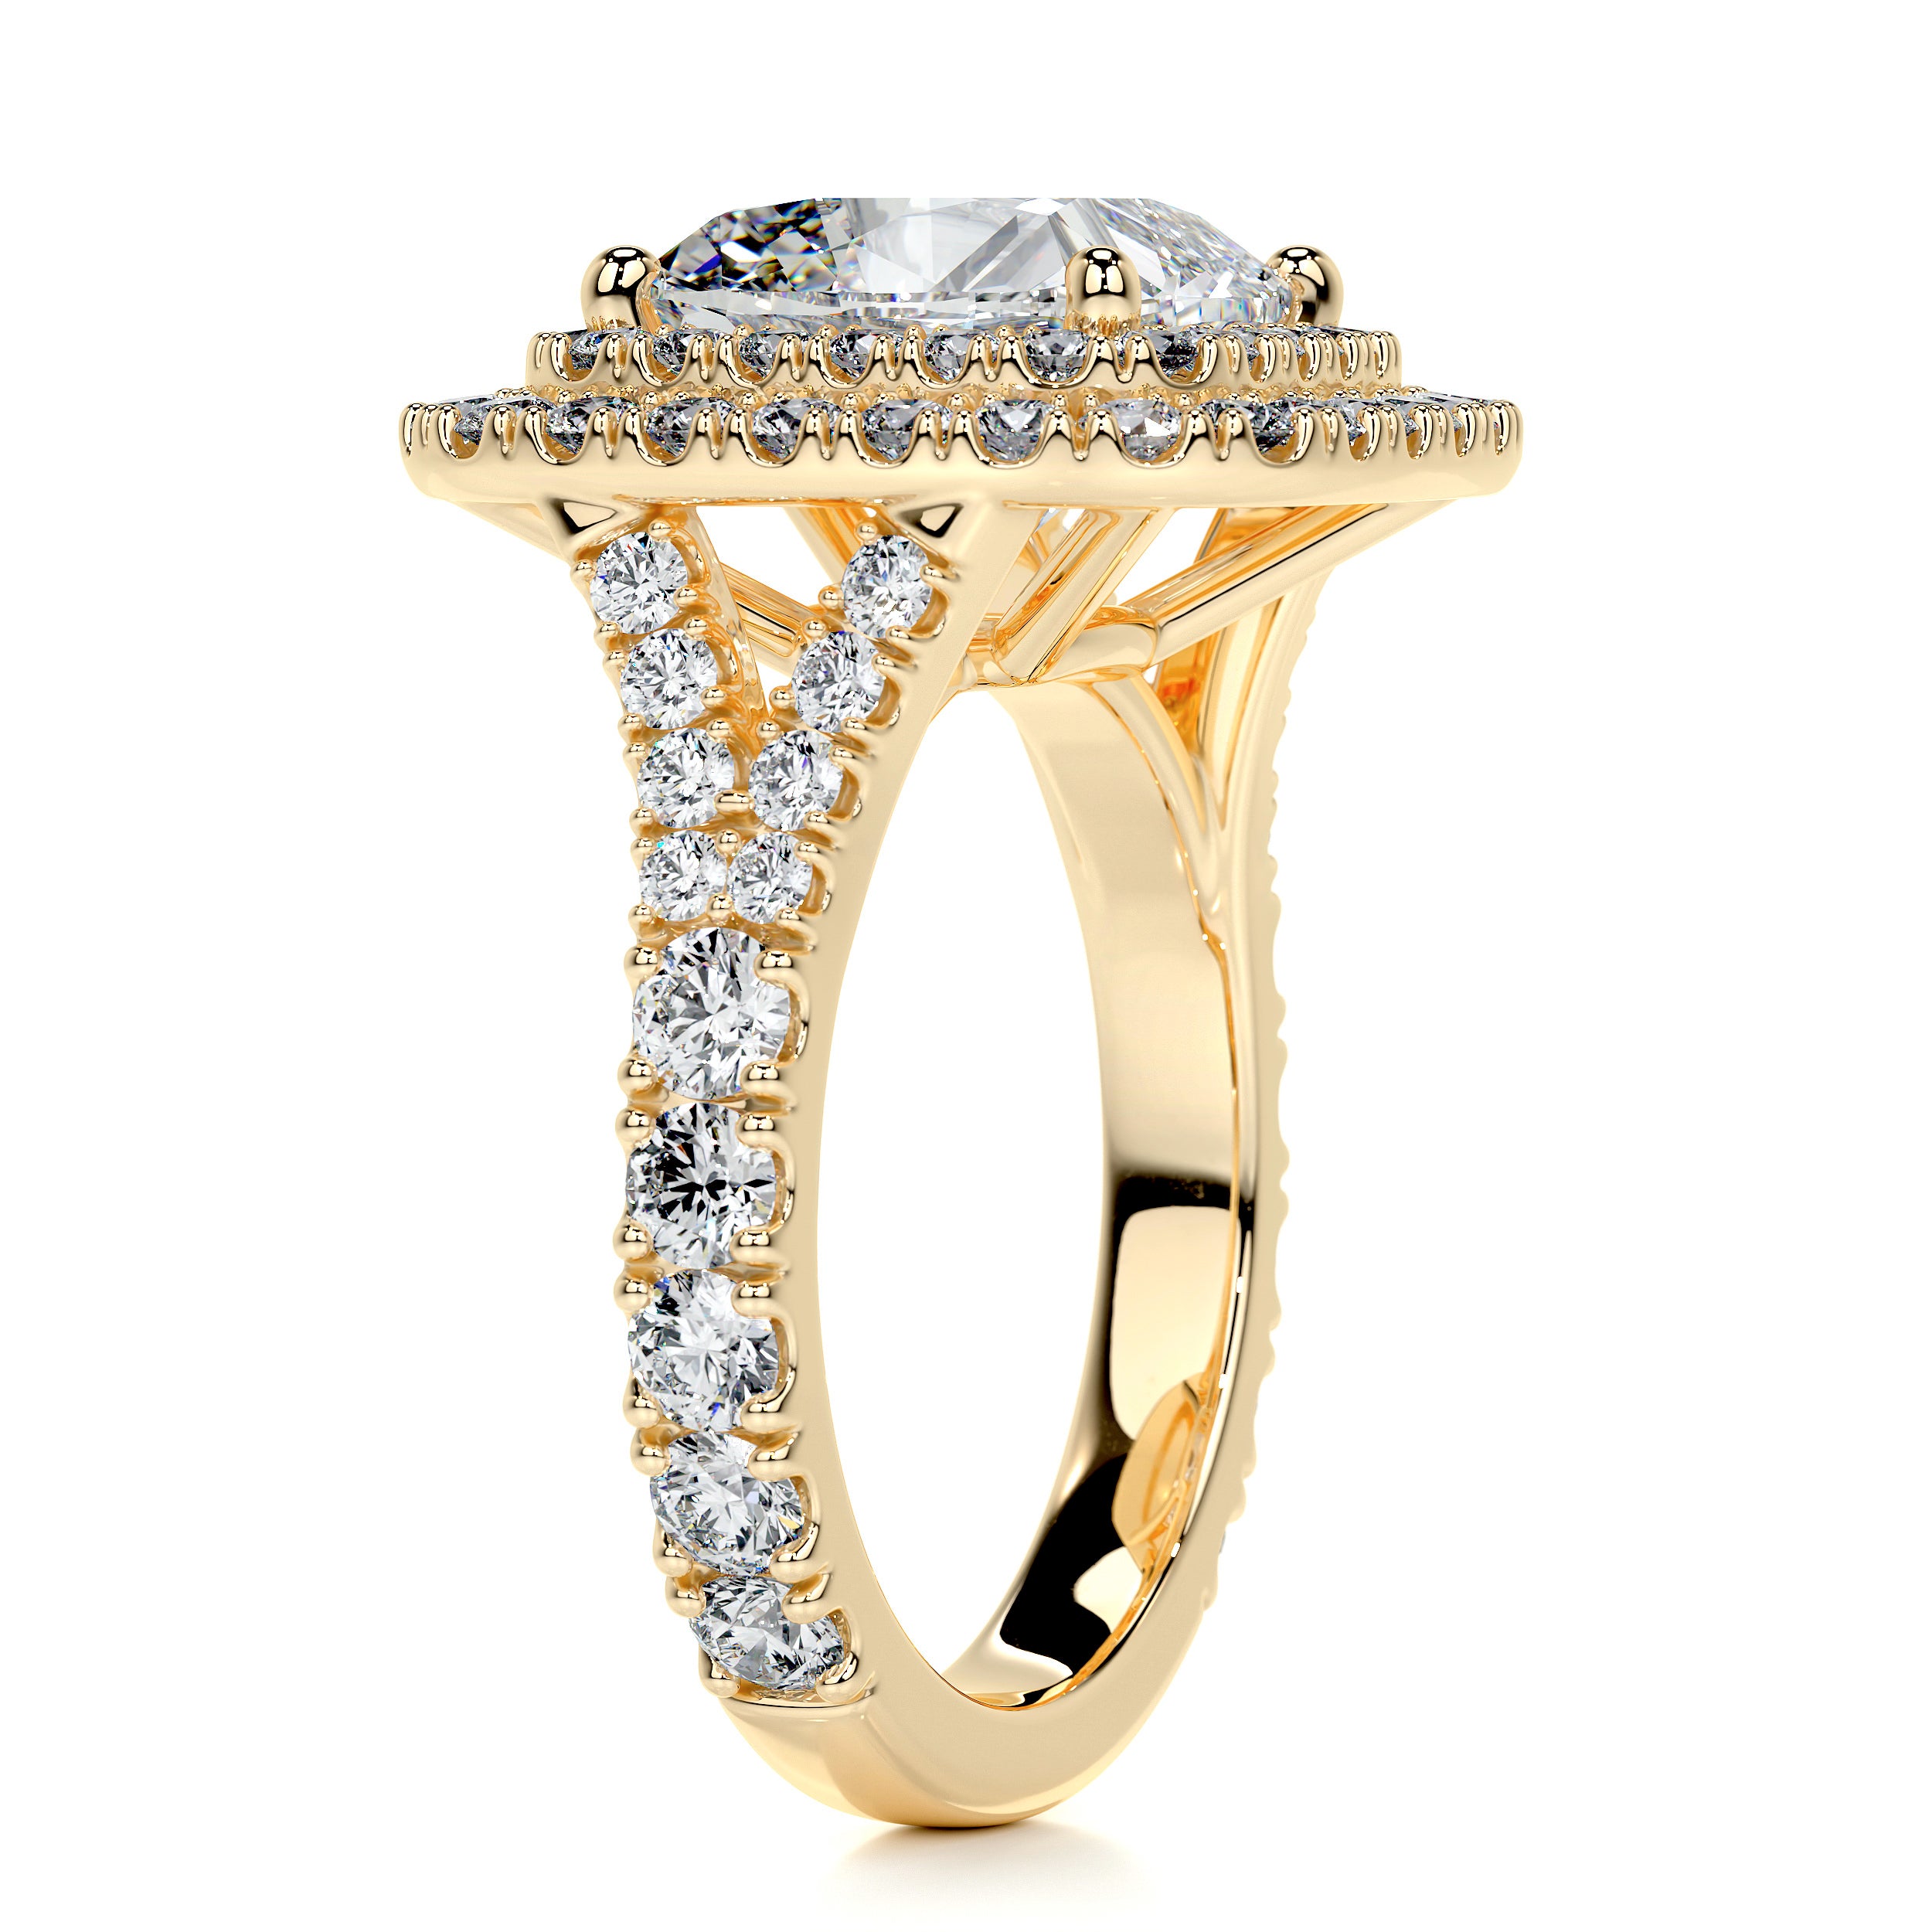 Marley Diamond Engagement Ring - 18K Yellow Gold